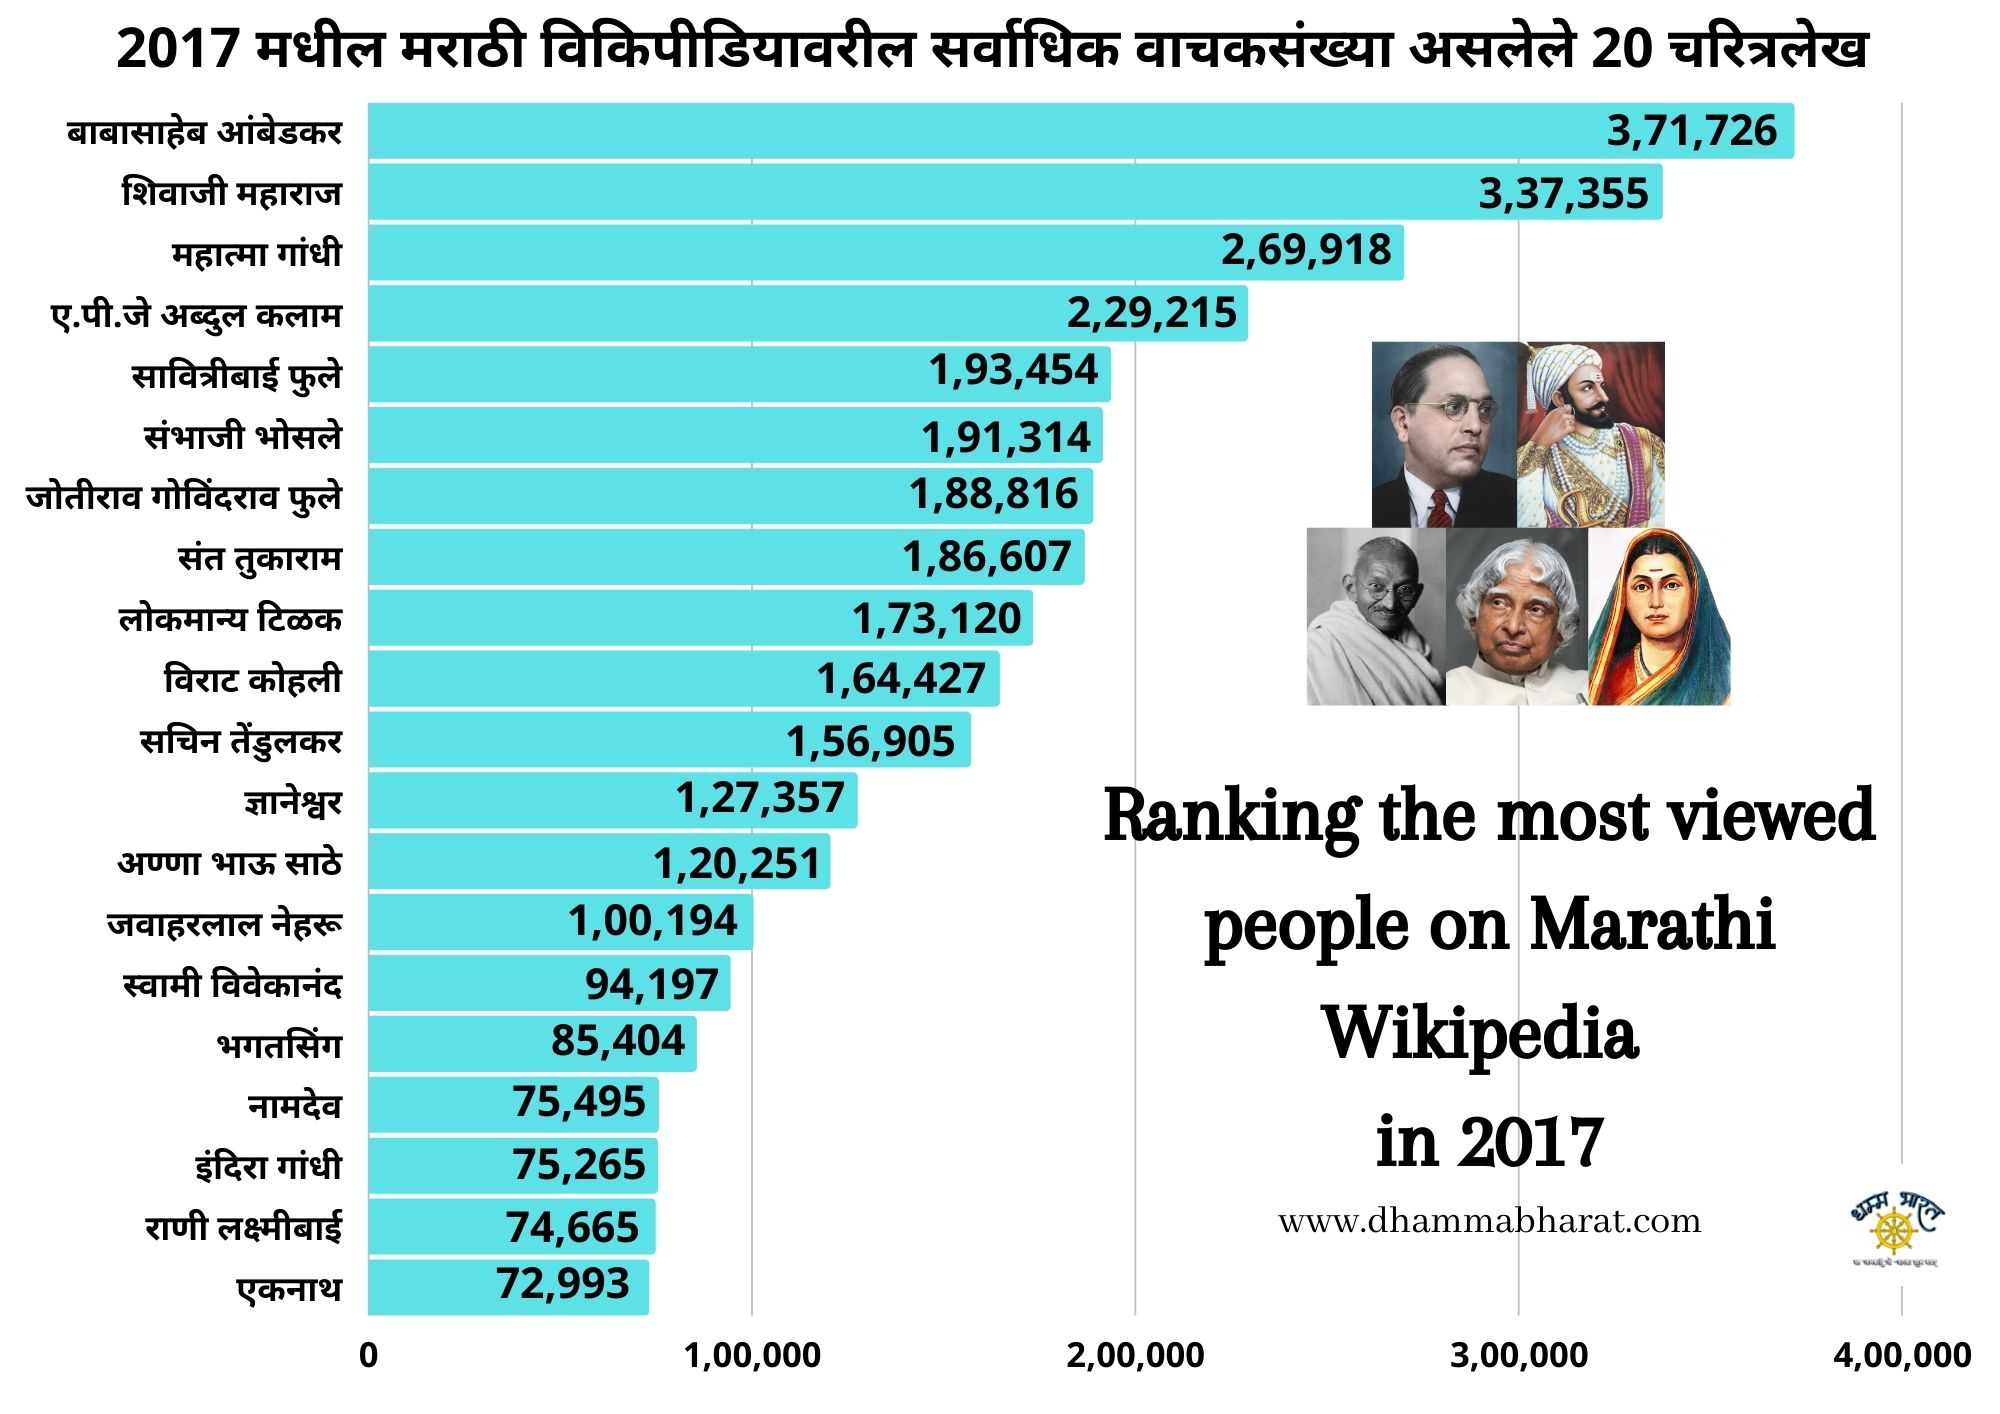 Ranking the most viewed people on Marathi Wikipedia